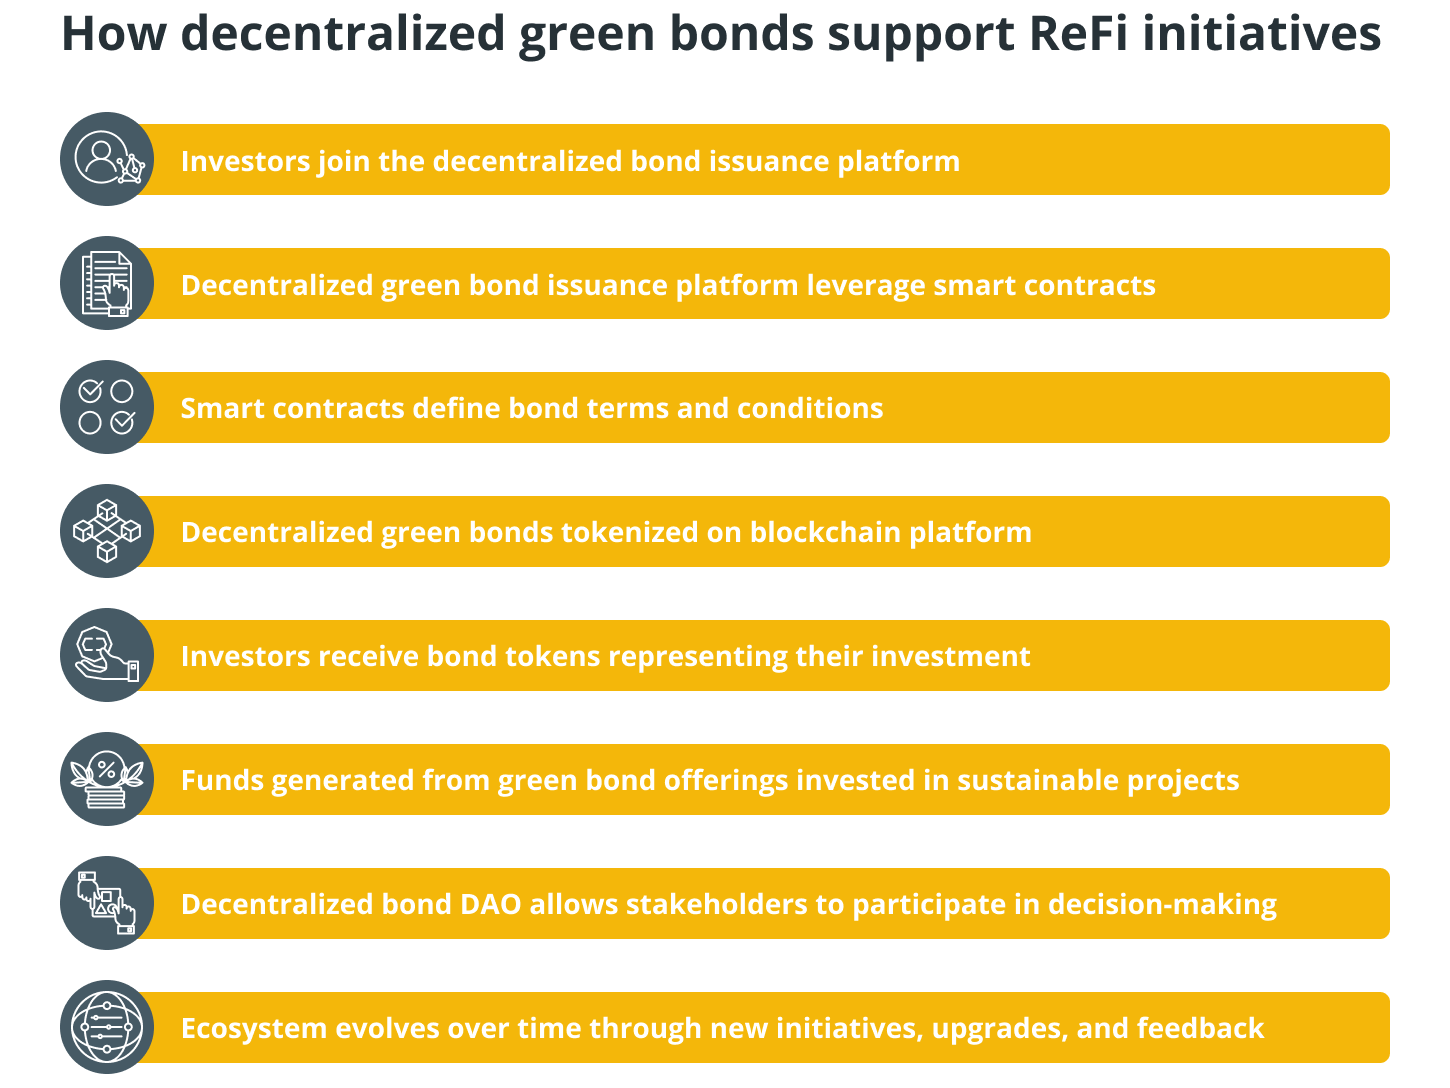 How decentralized green bonds support ReFi initiatives